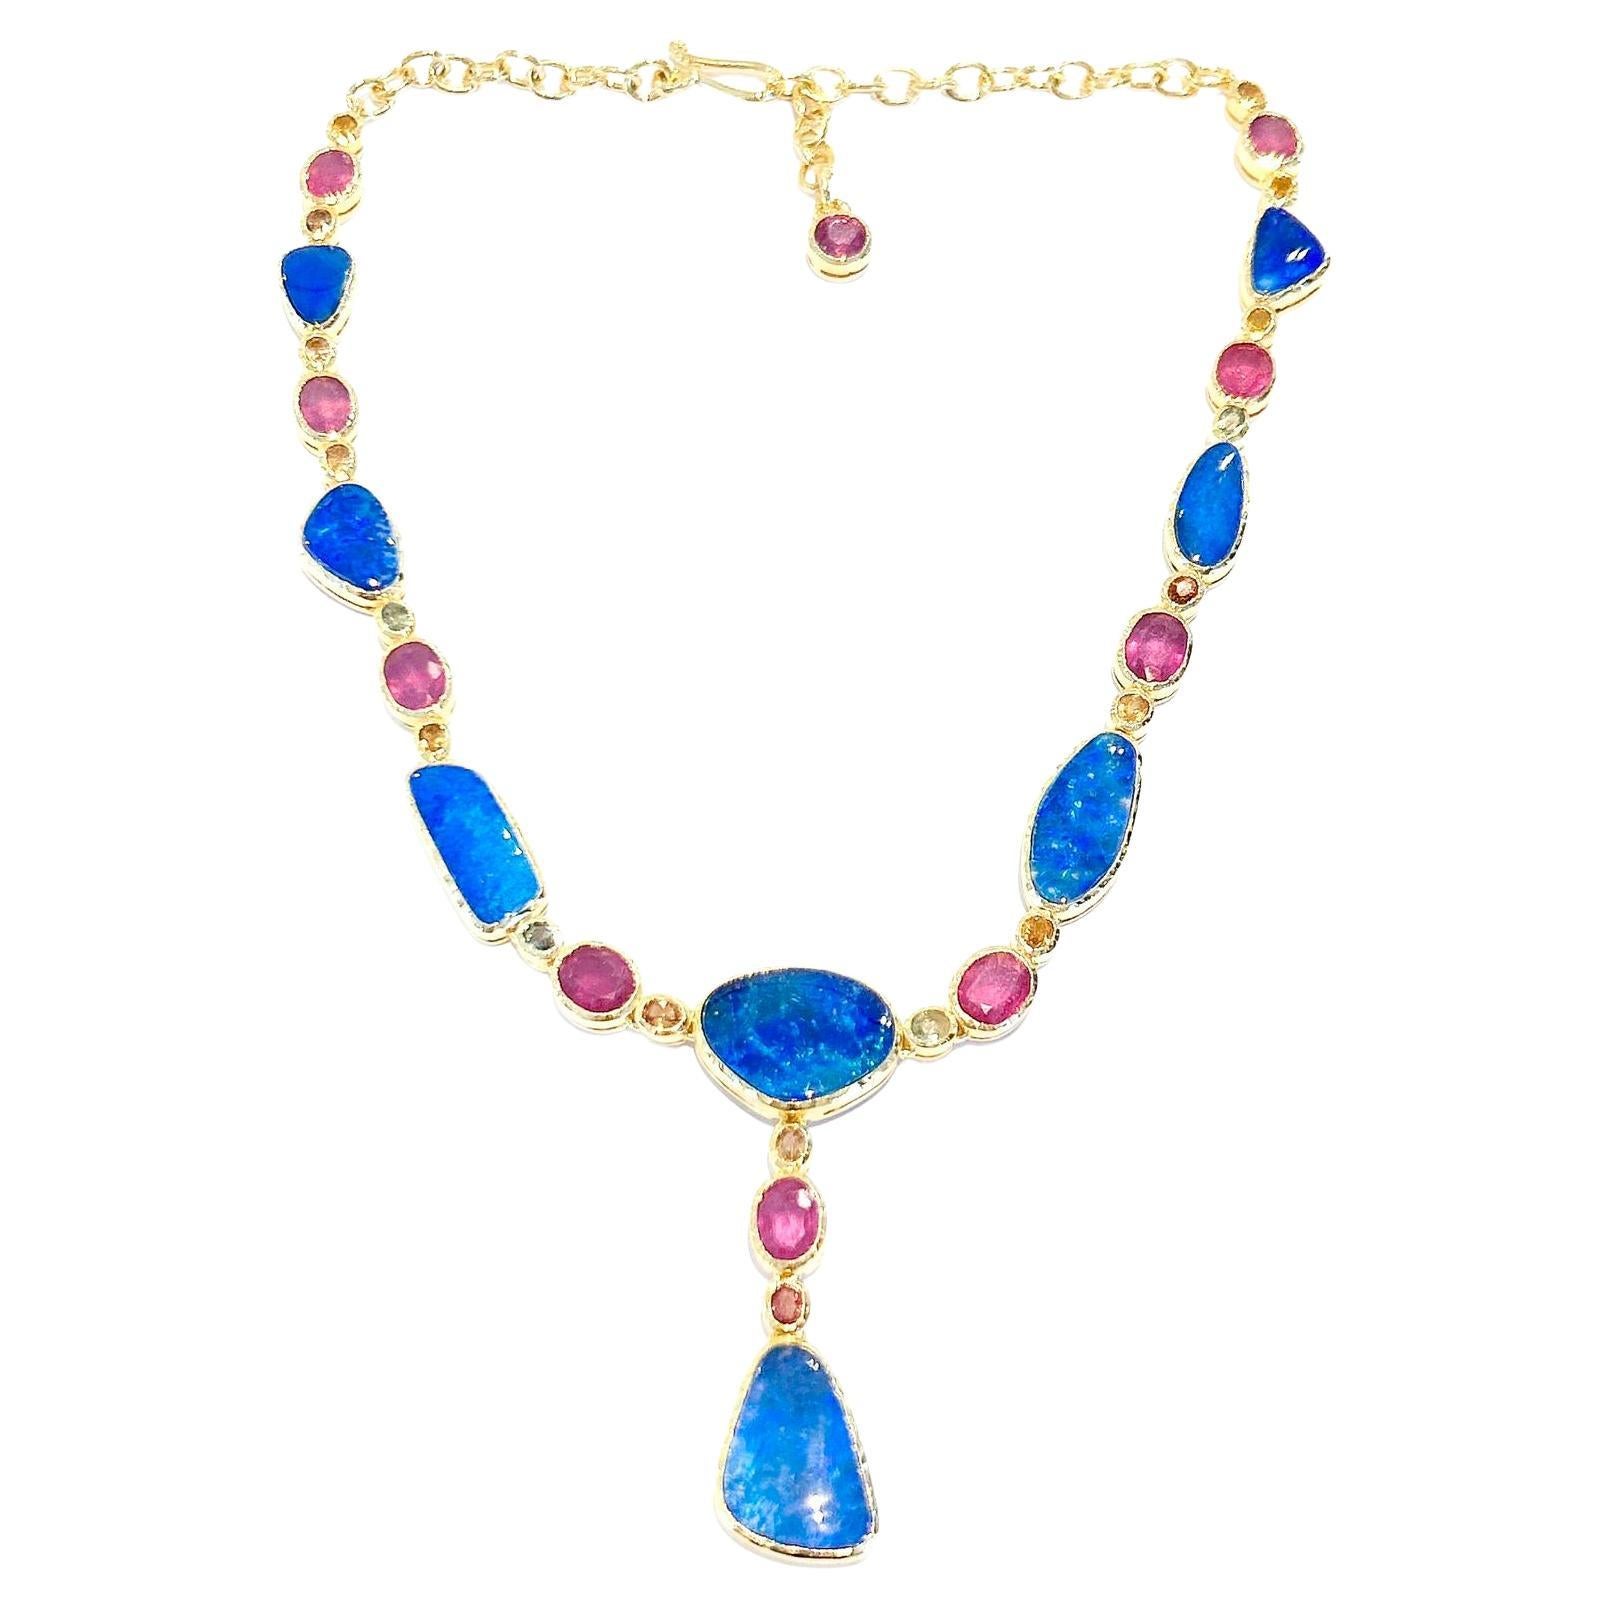 Bochic “Capri” Blue Opal, Ruby & Sapphire Necklace Set in 22k Gold & Silver